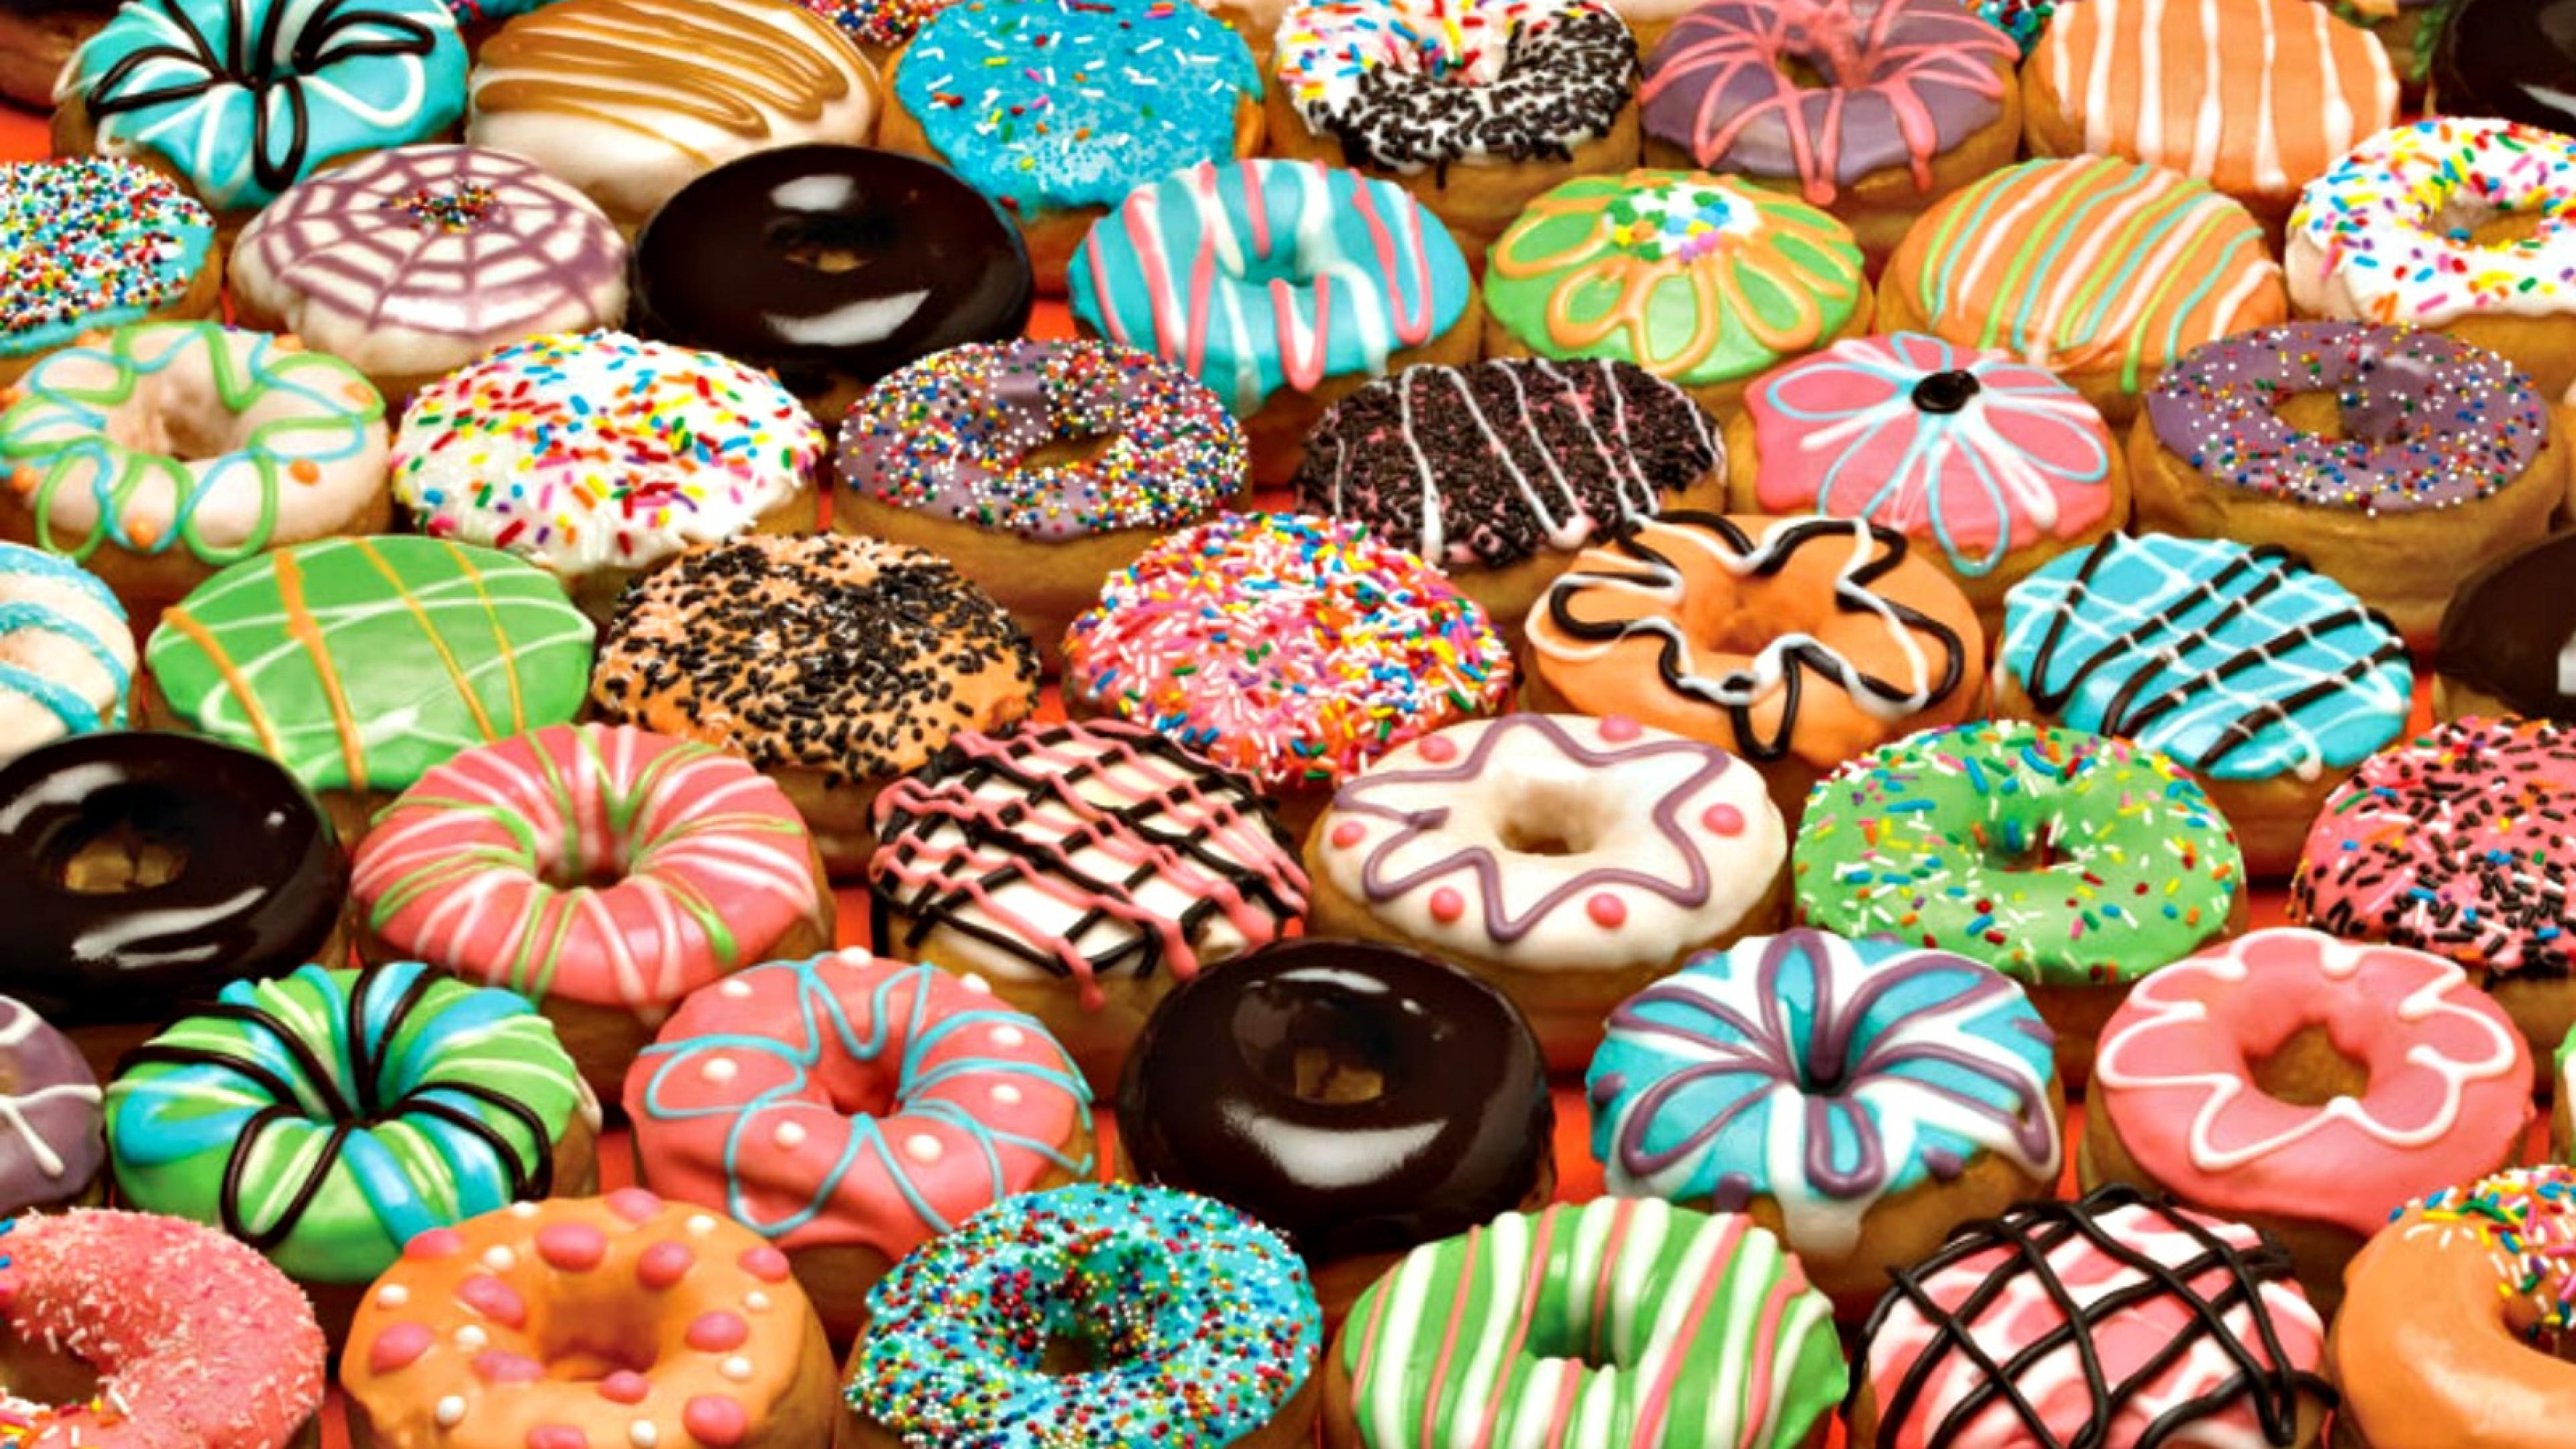 dunkin donuts wallpaper,süße,essen,backwaren,dessert,süßwaren